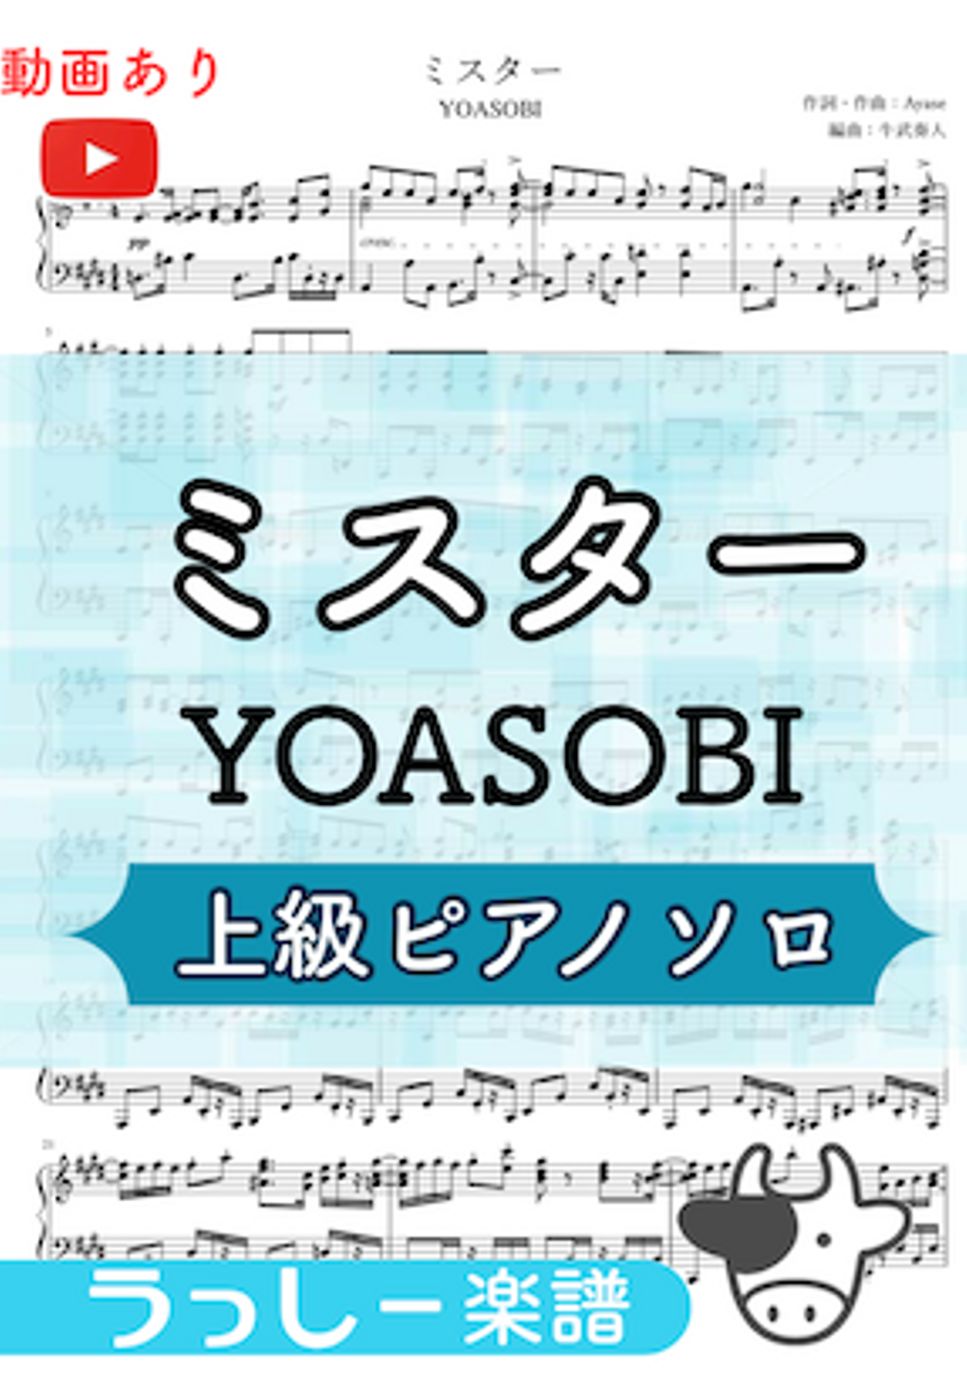 YOASOBI - ミスター (上級ピアノ) by 牛武奏人